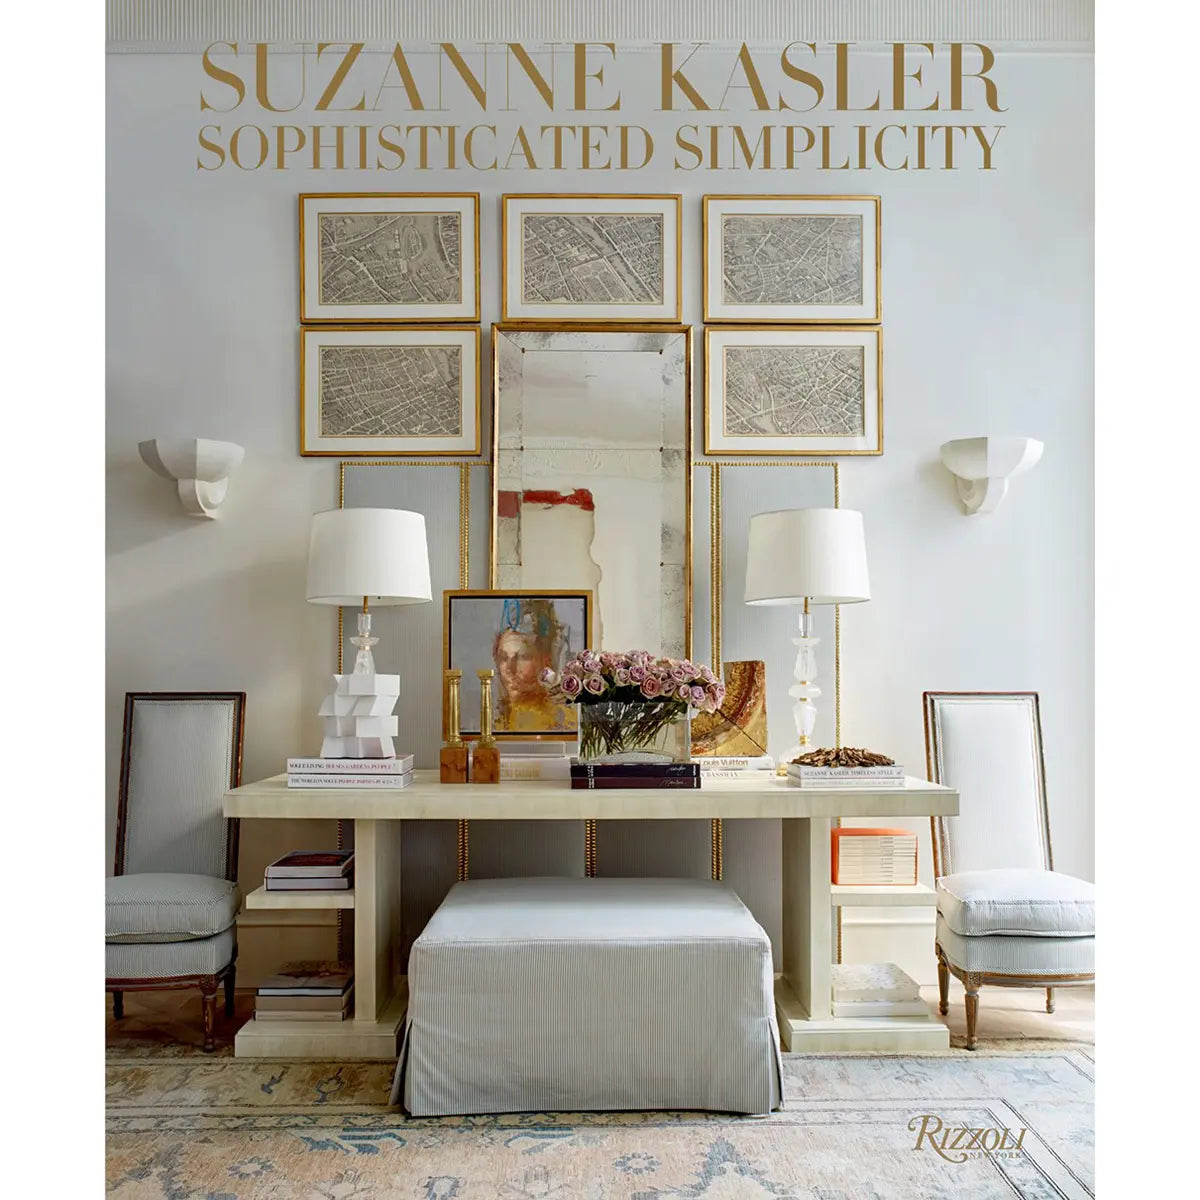 Penguin Random House Book Suzanne Kasler Sophisticated Simplicity